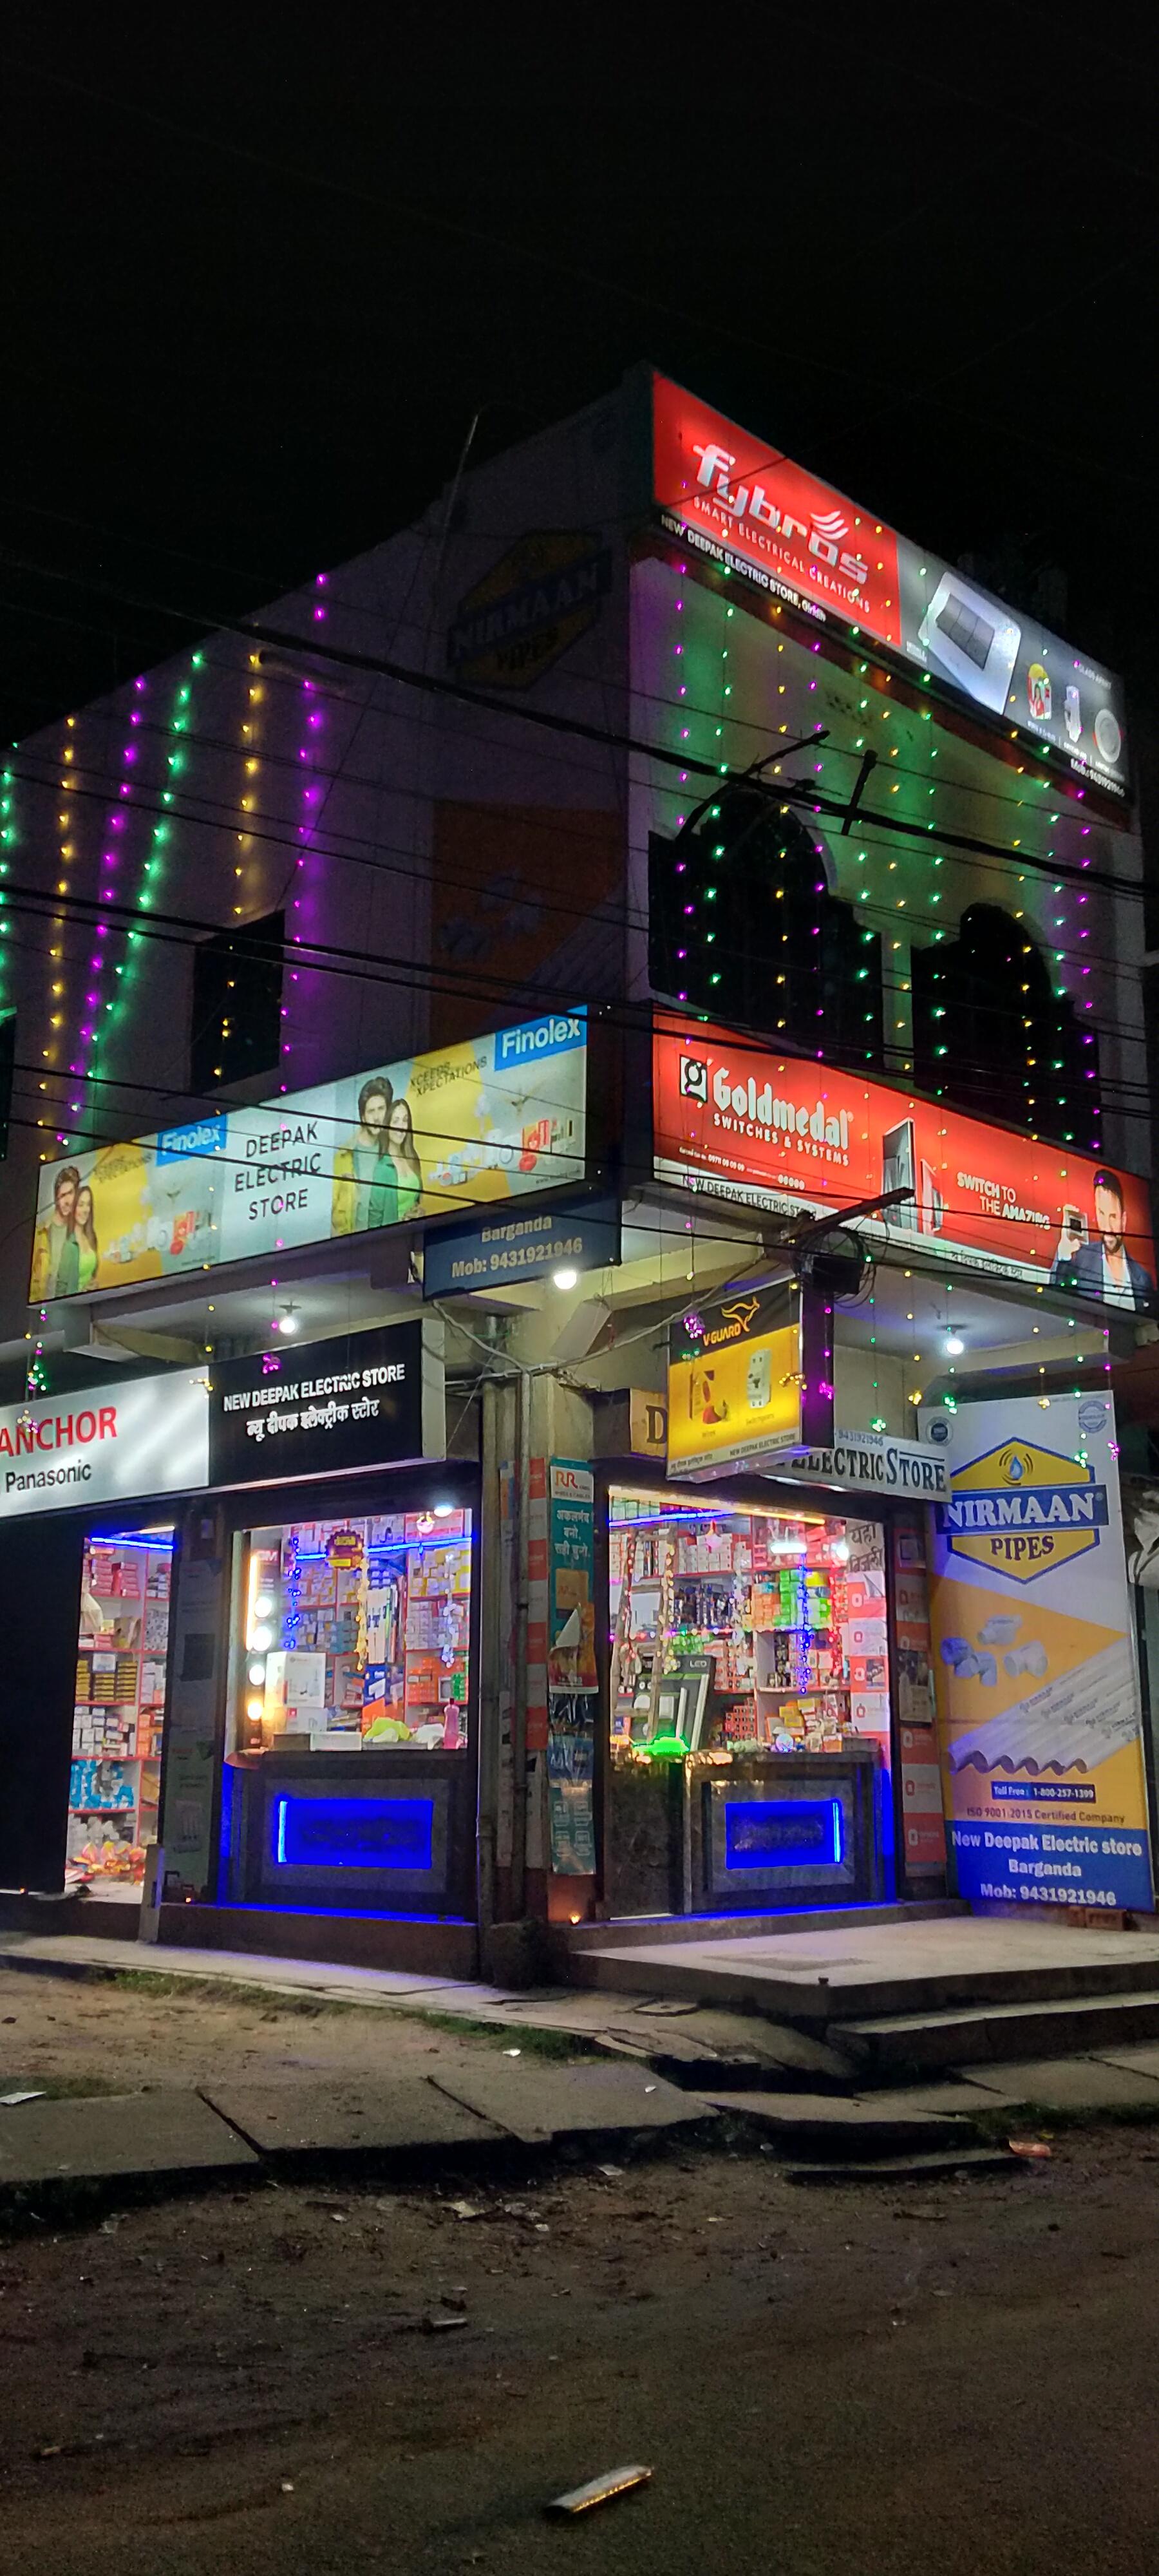 New Deepak Electric Store